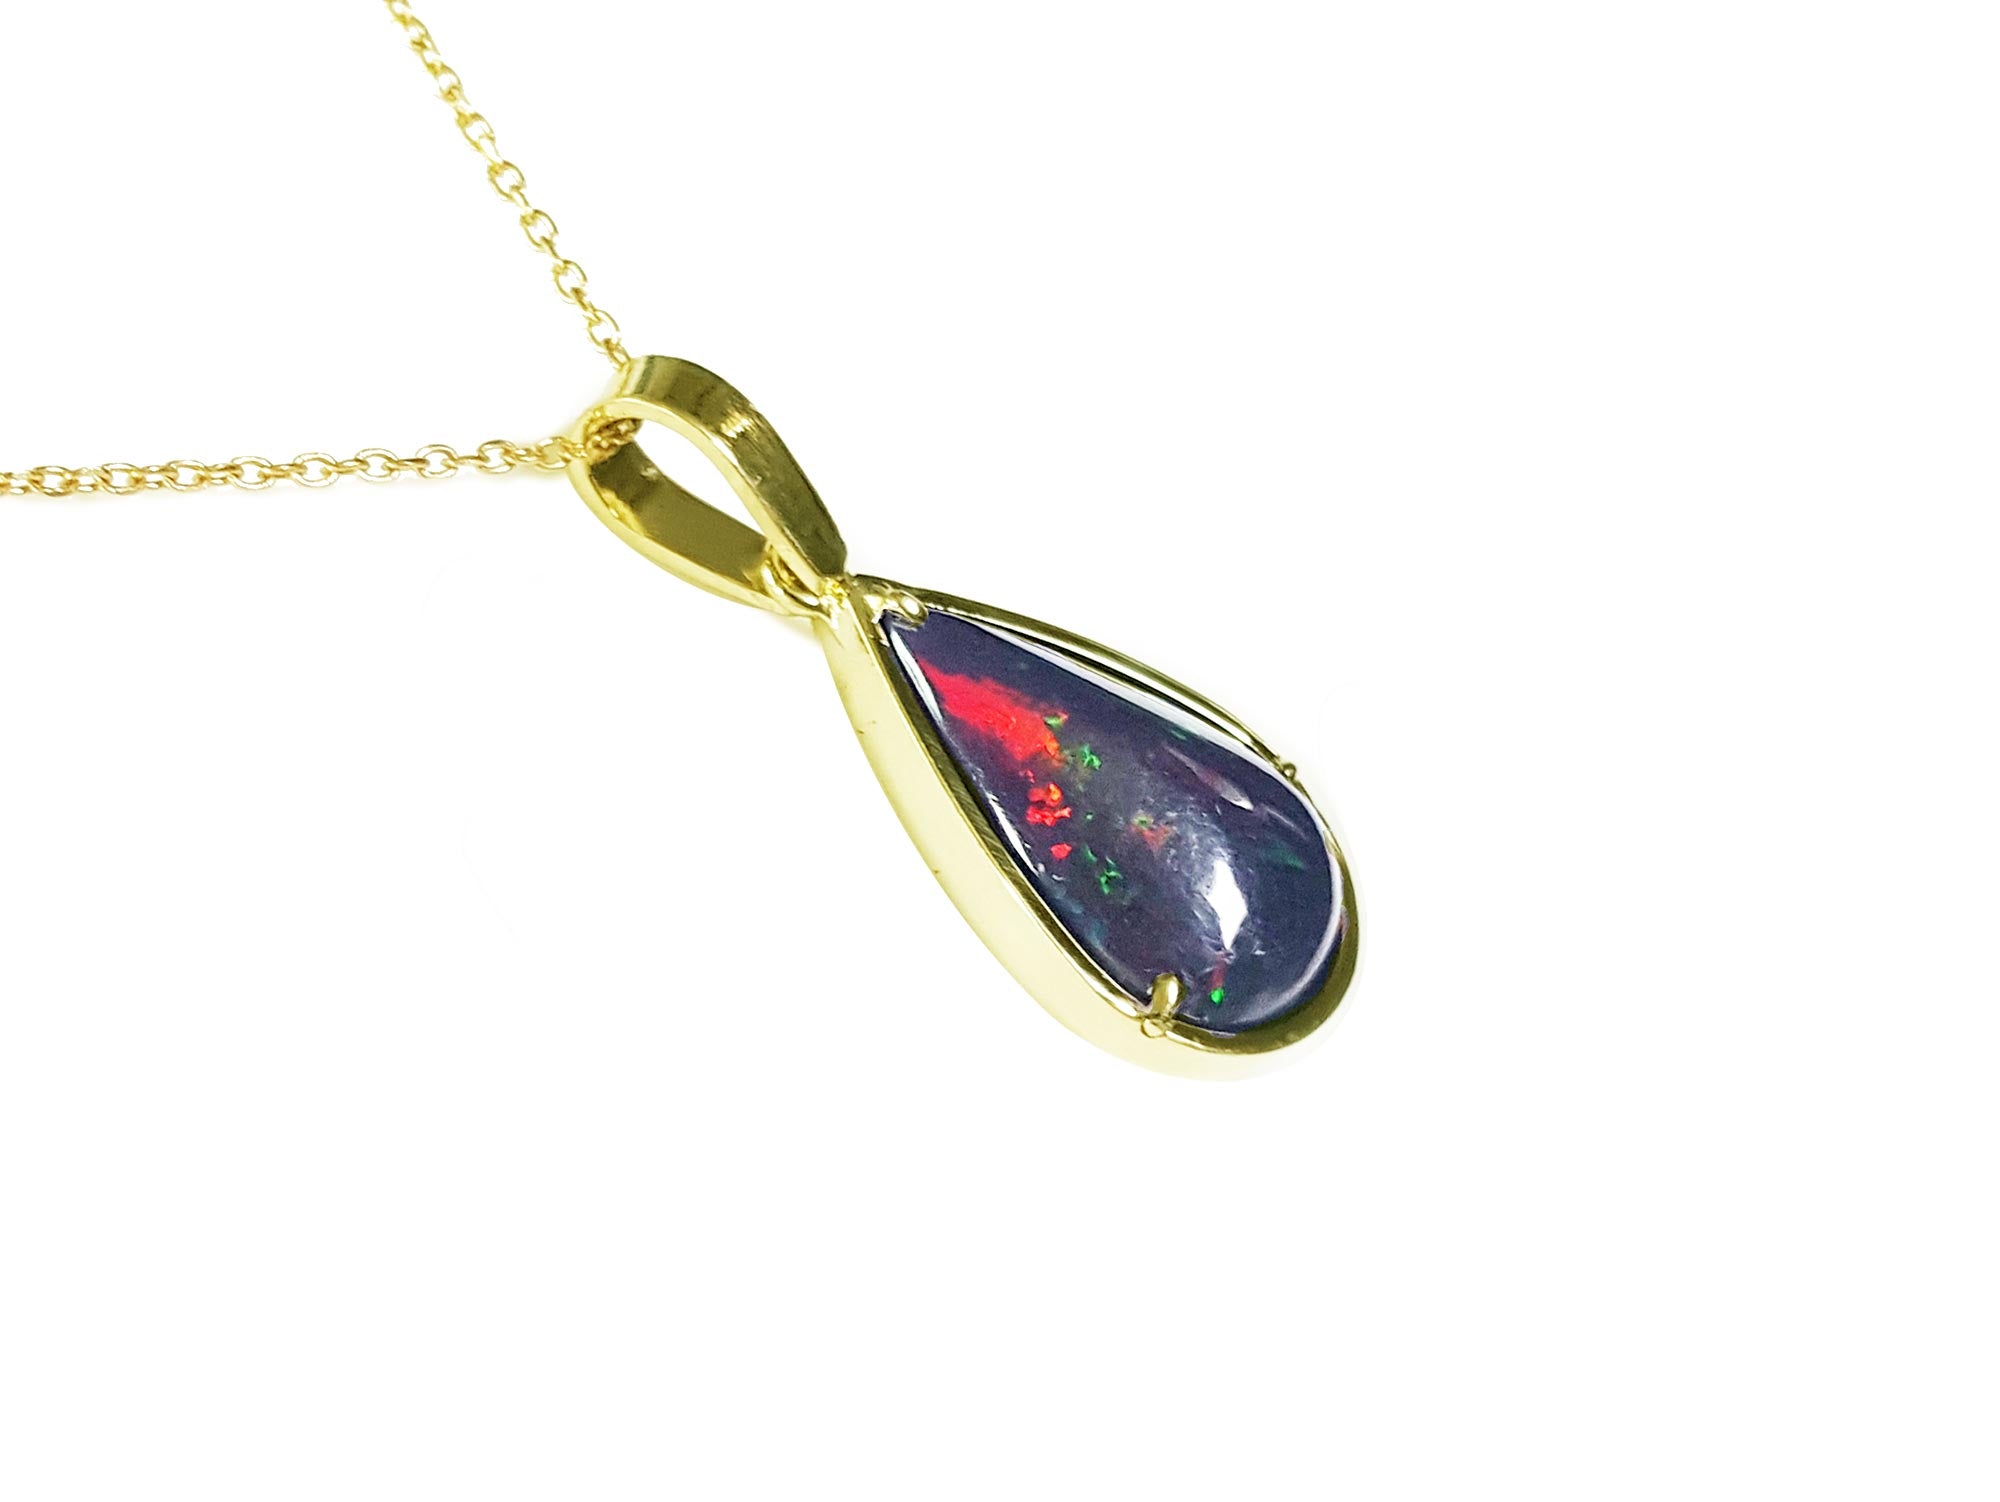 Black opal necklace